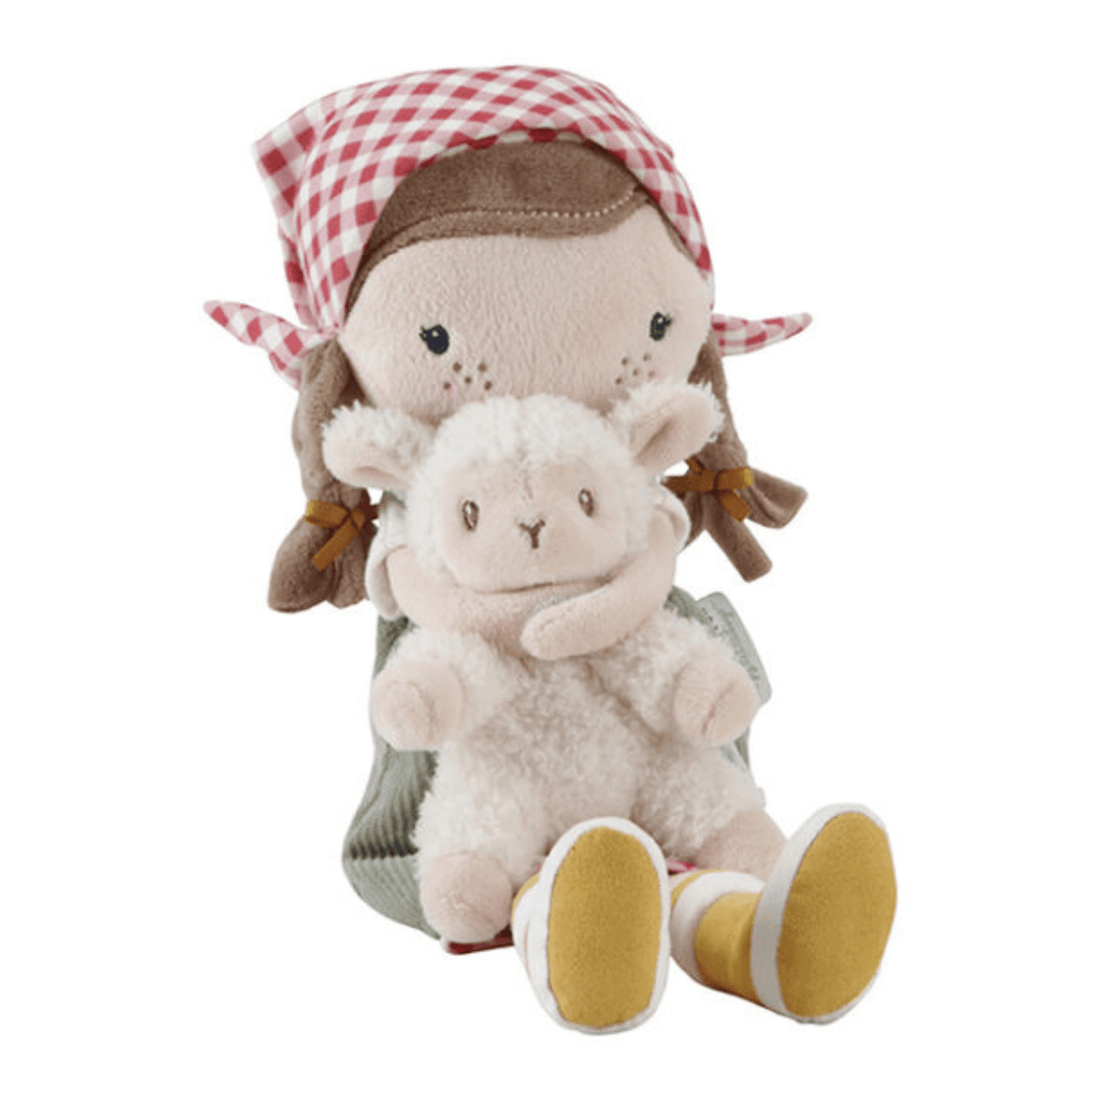 Doll - farmer Rosa with a sheep